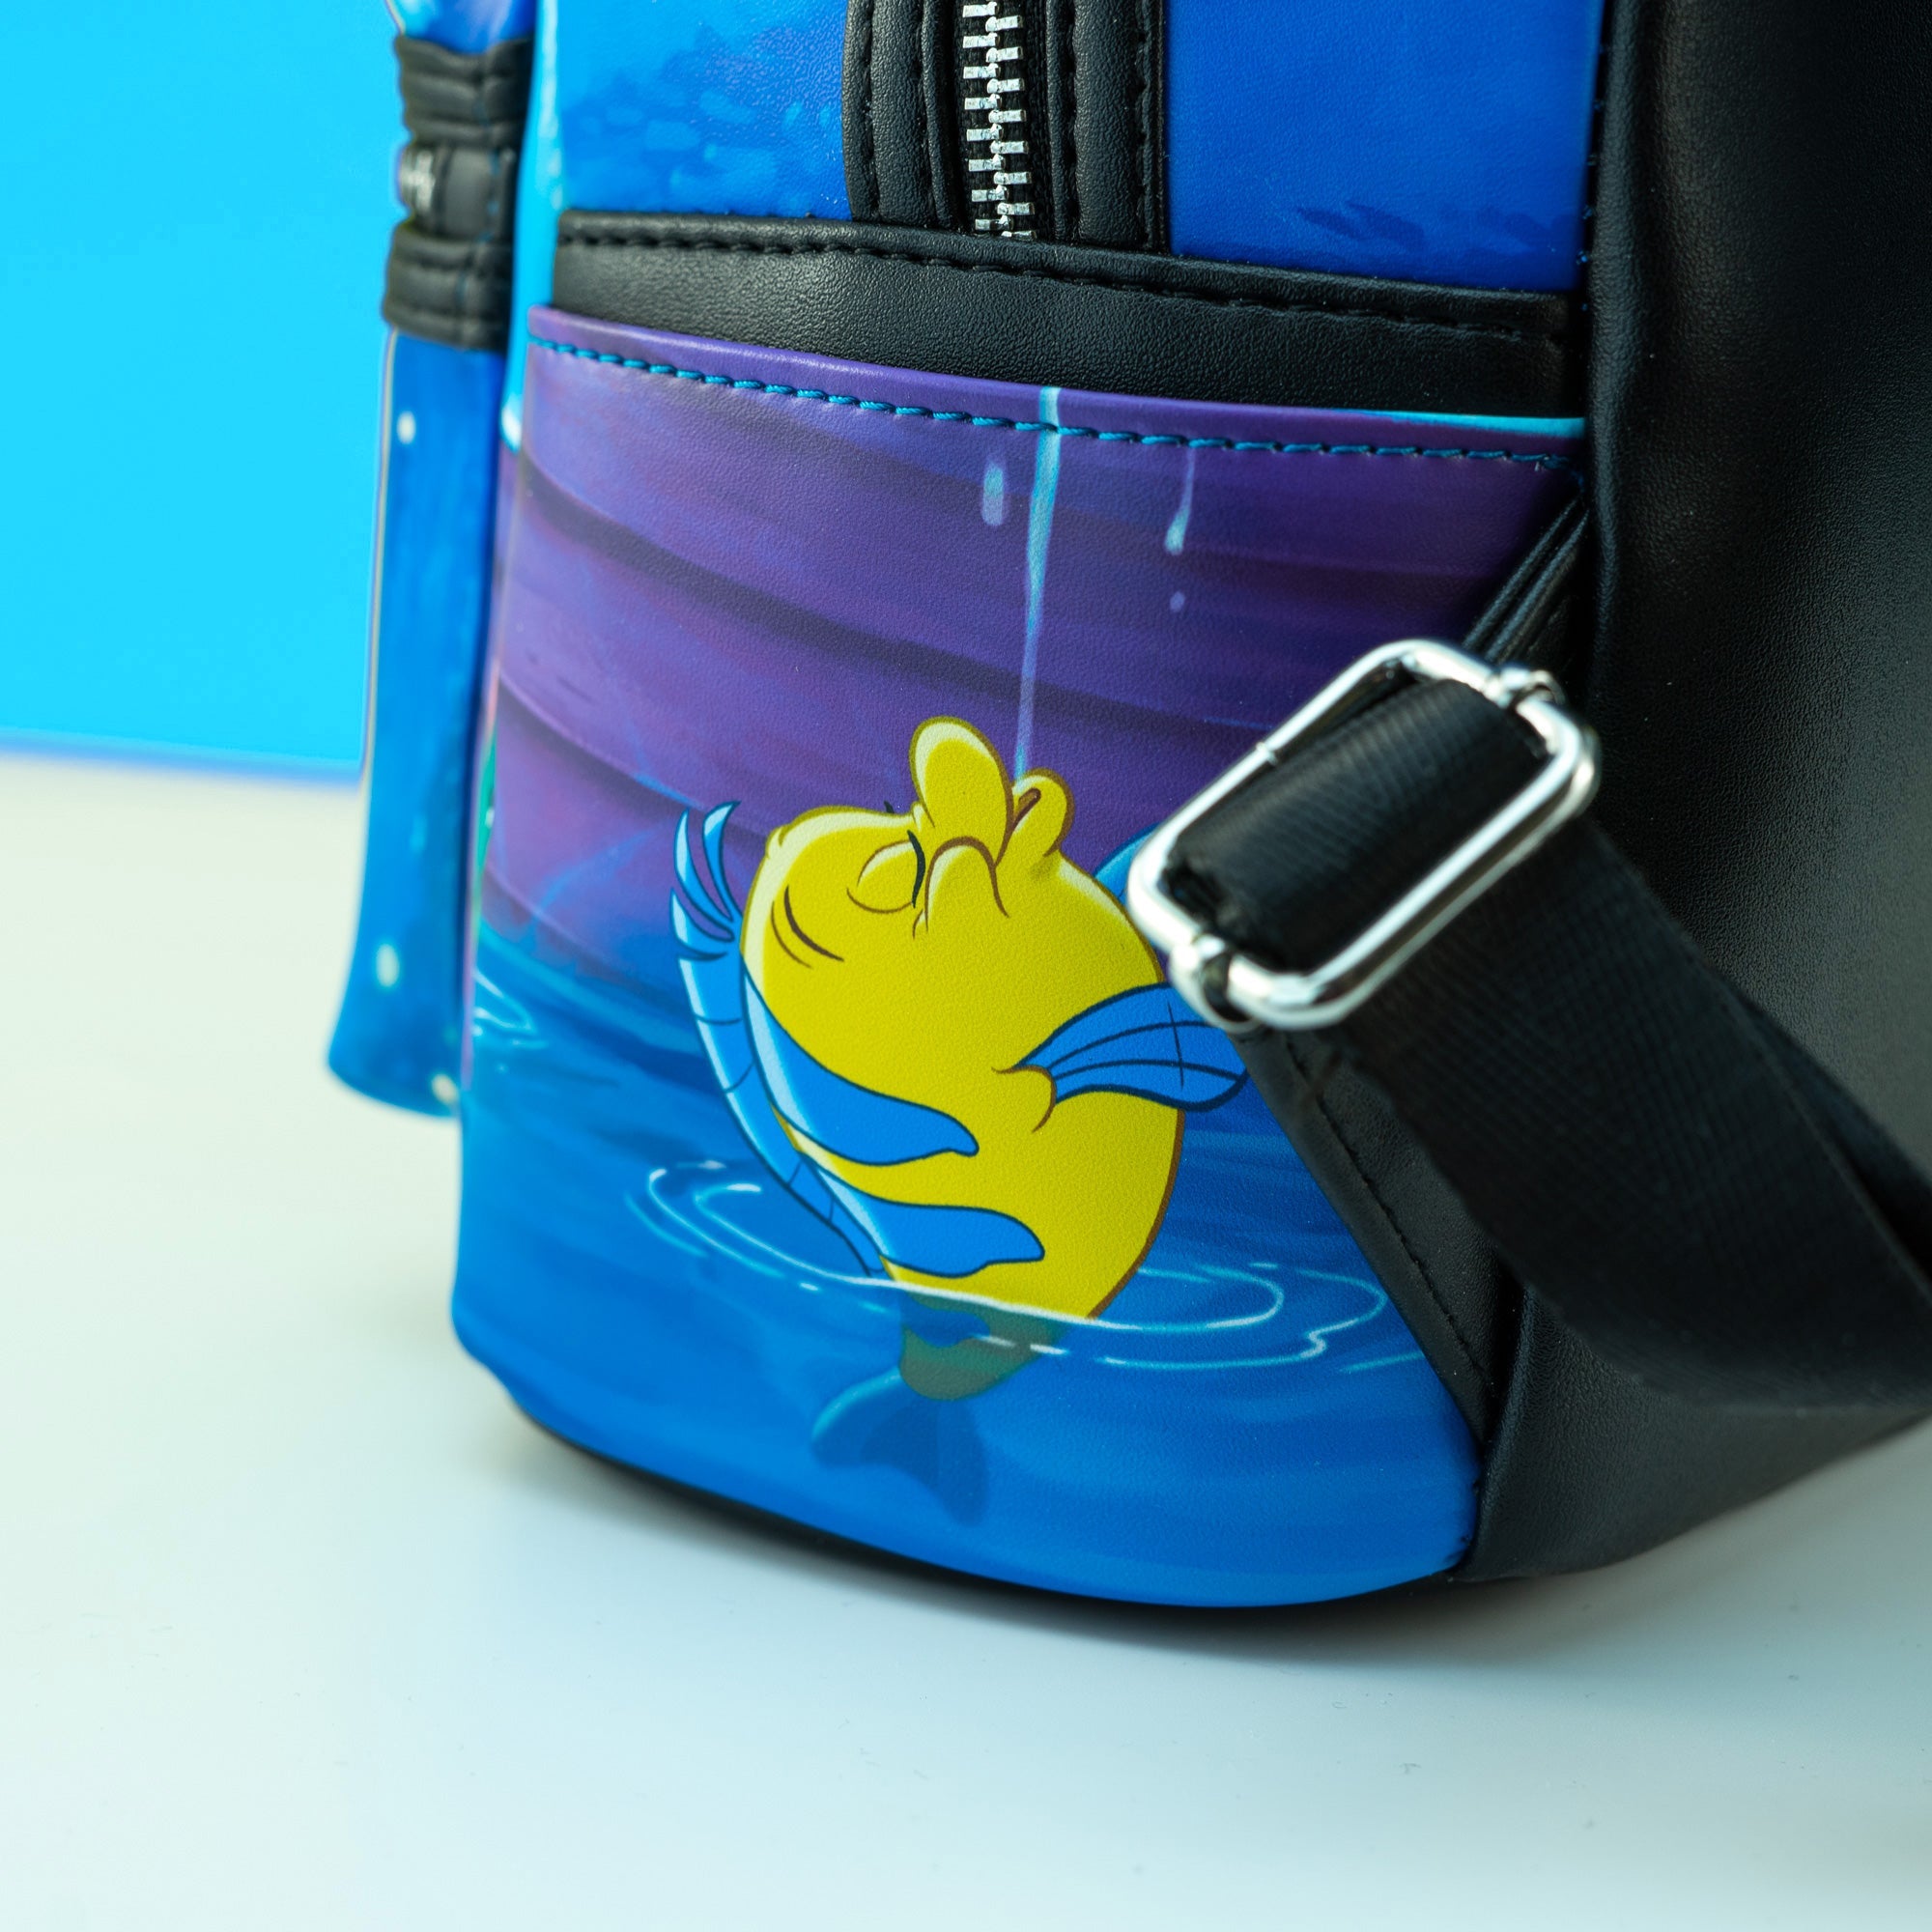 Loungefly x Disney The Little Mermaid Kiss The Girl Mini Backpack - GeekCore